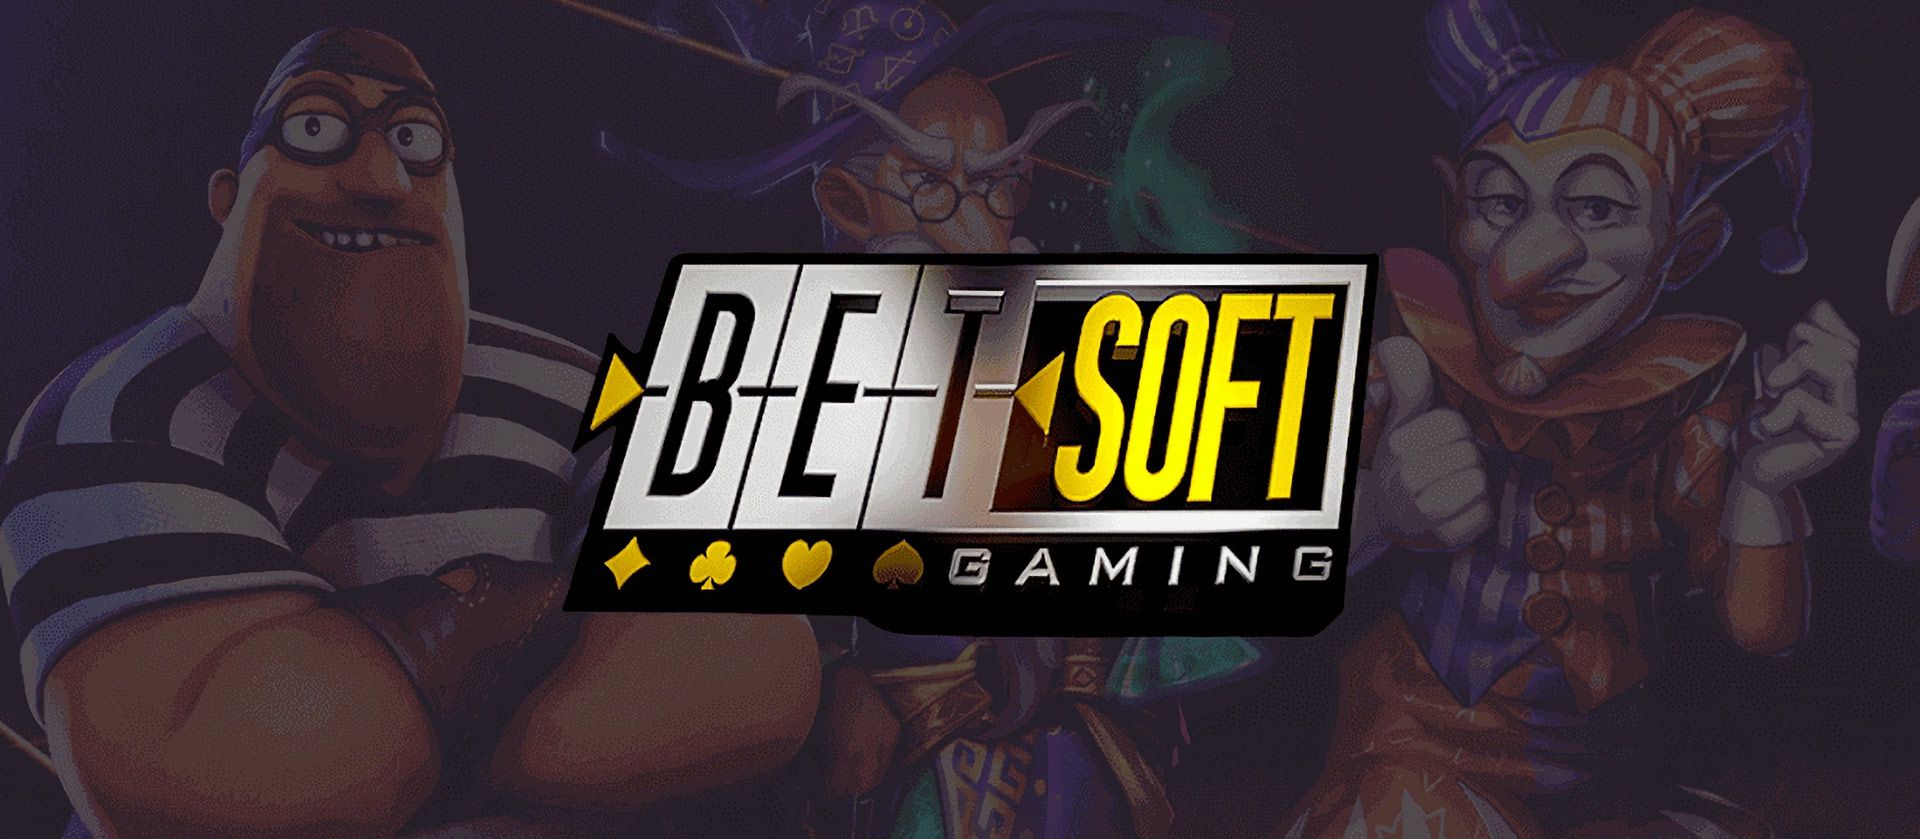 Betsoft gaming software provider in Ireland online casinos.